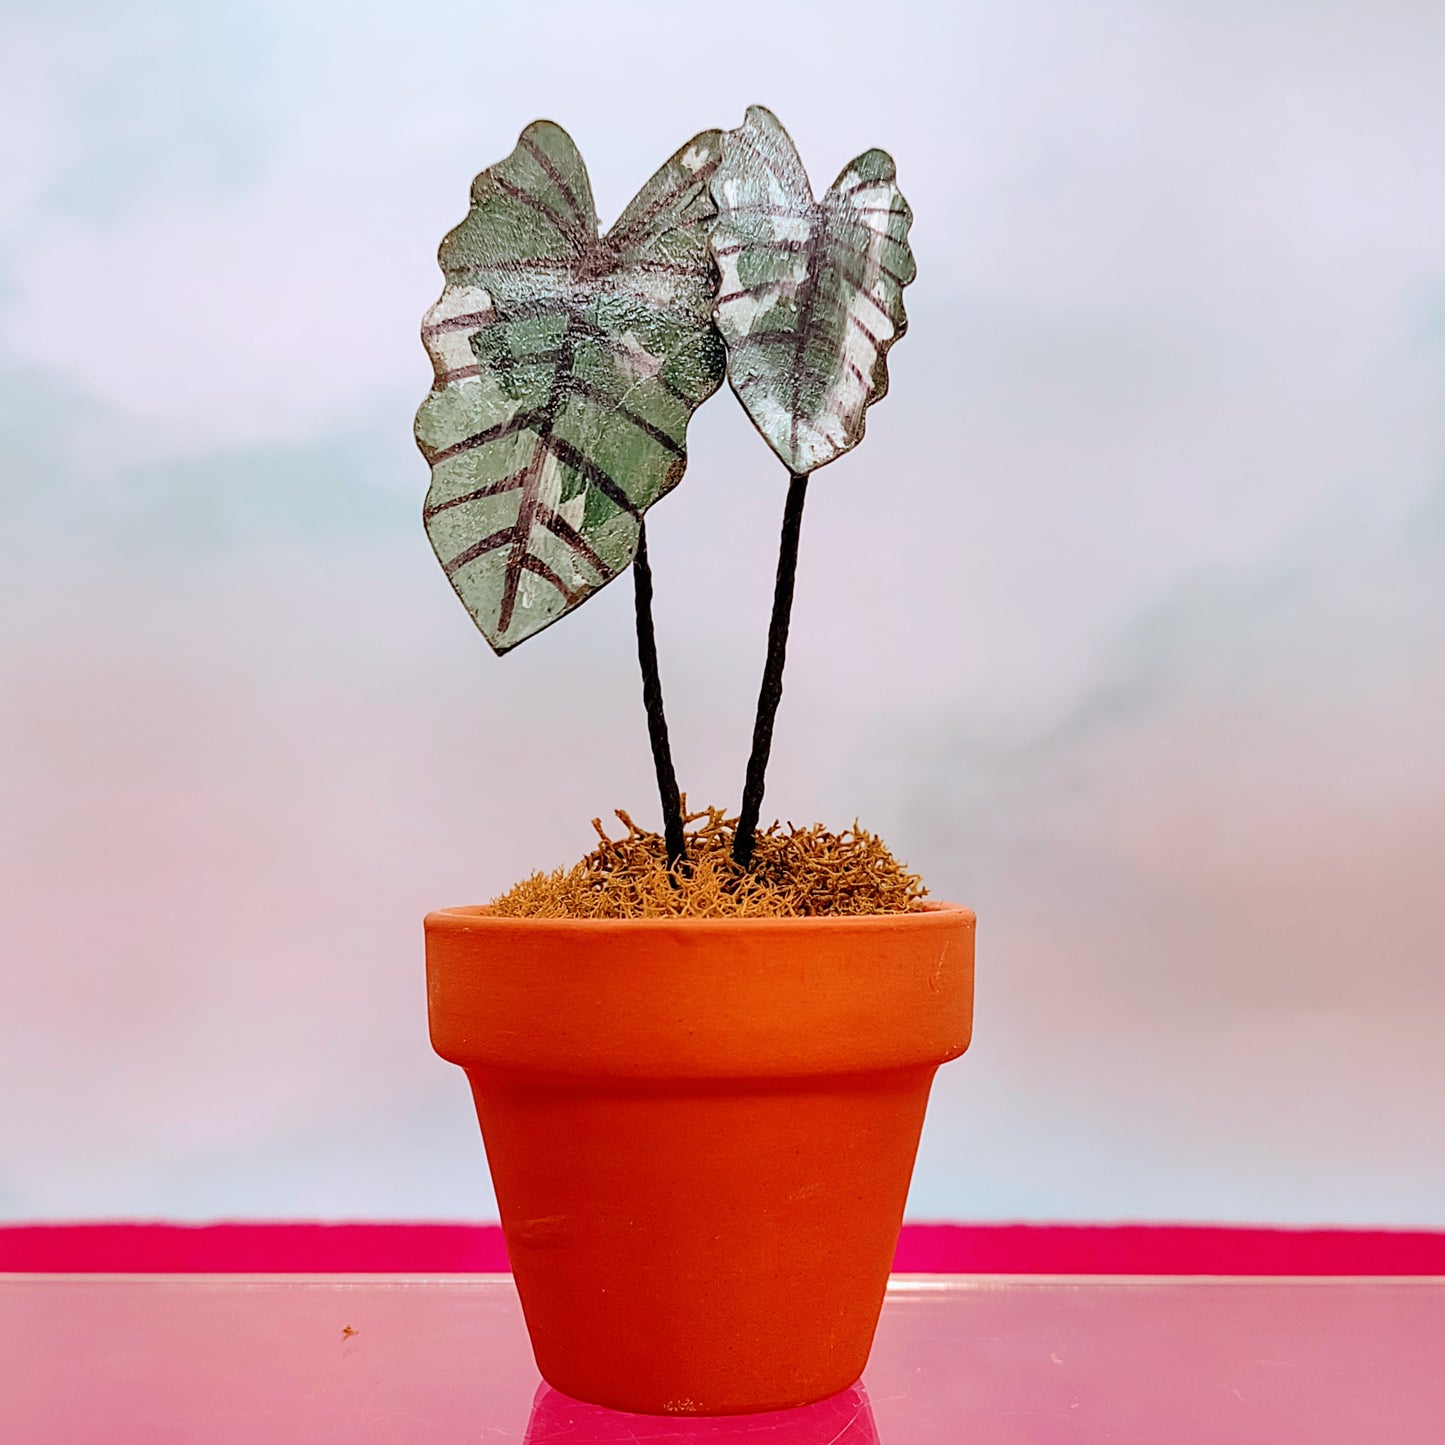 Tiny Magical Paper House Plant Alocasia Albo in Clay Pot- DECORATIVE